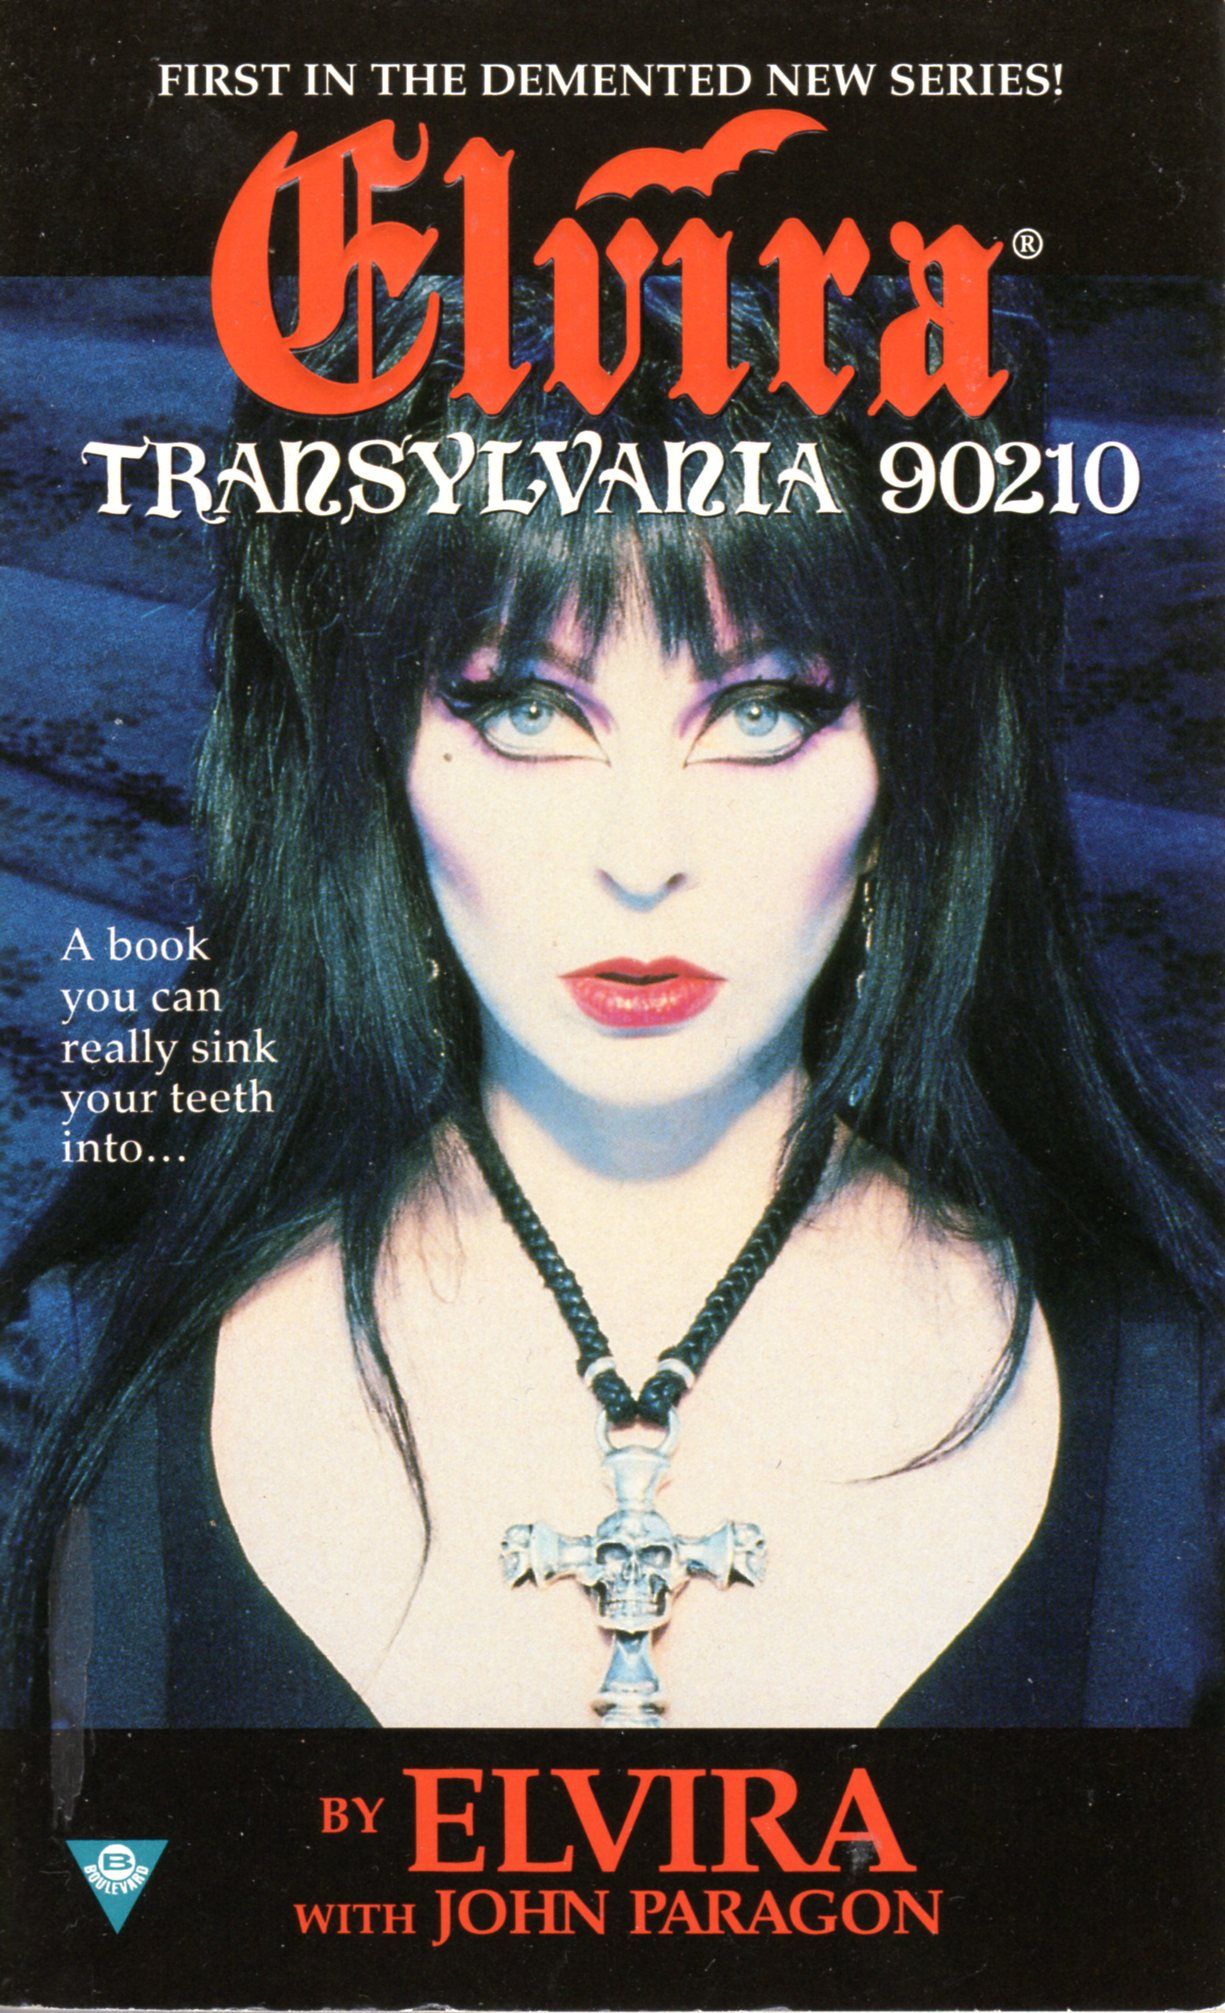 Elvira: Transylvania 90210 - Elvira with John Paragon | My Books - A ...